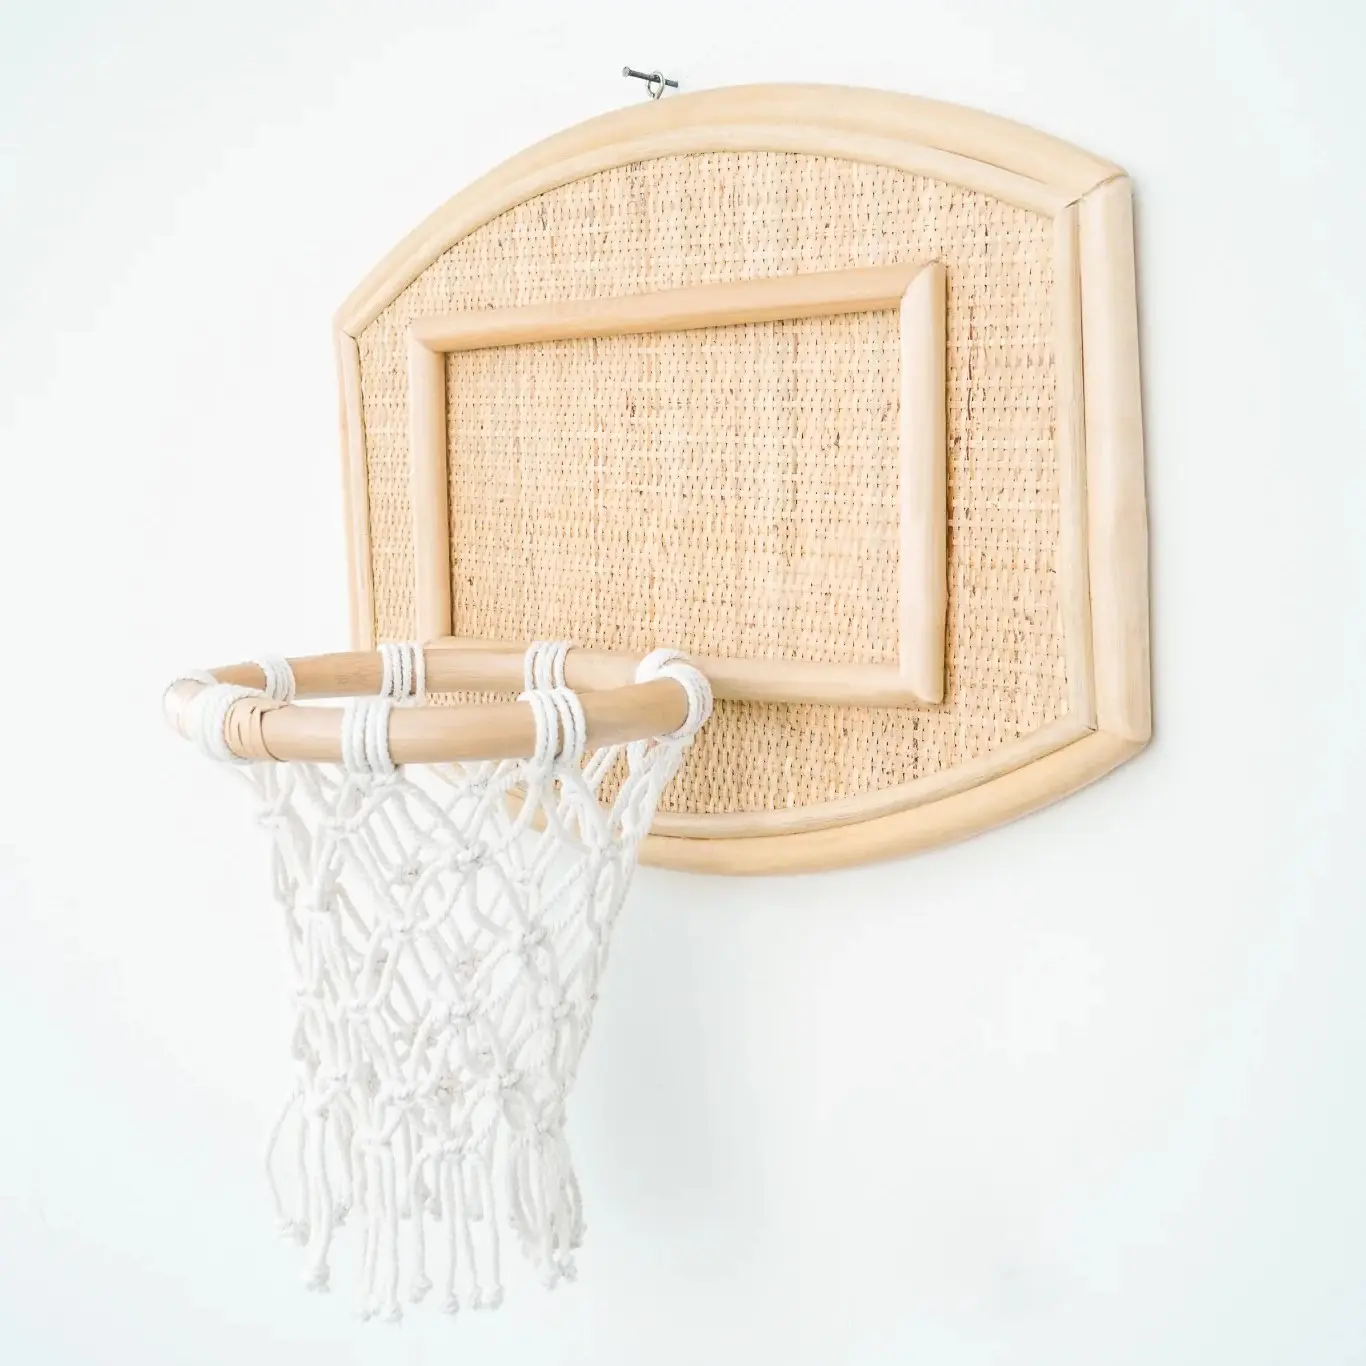 Harga Murah Rotan Mainan Anak-anak Hobi Baru Grosir Bola Basket Hoops Dalam Ruangan Buatan Tangan Bermain Mainan untuk Anak-anak Balita